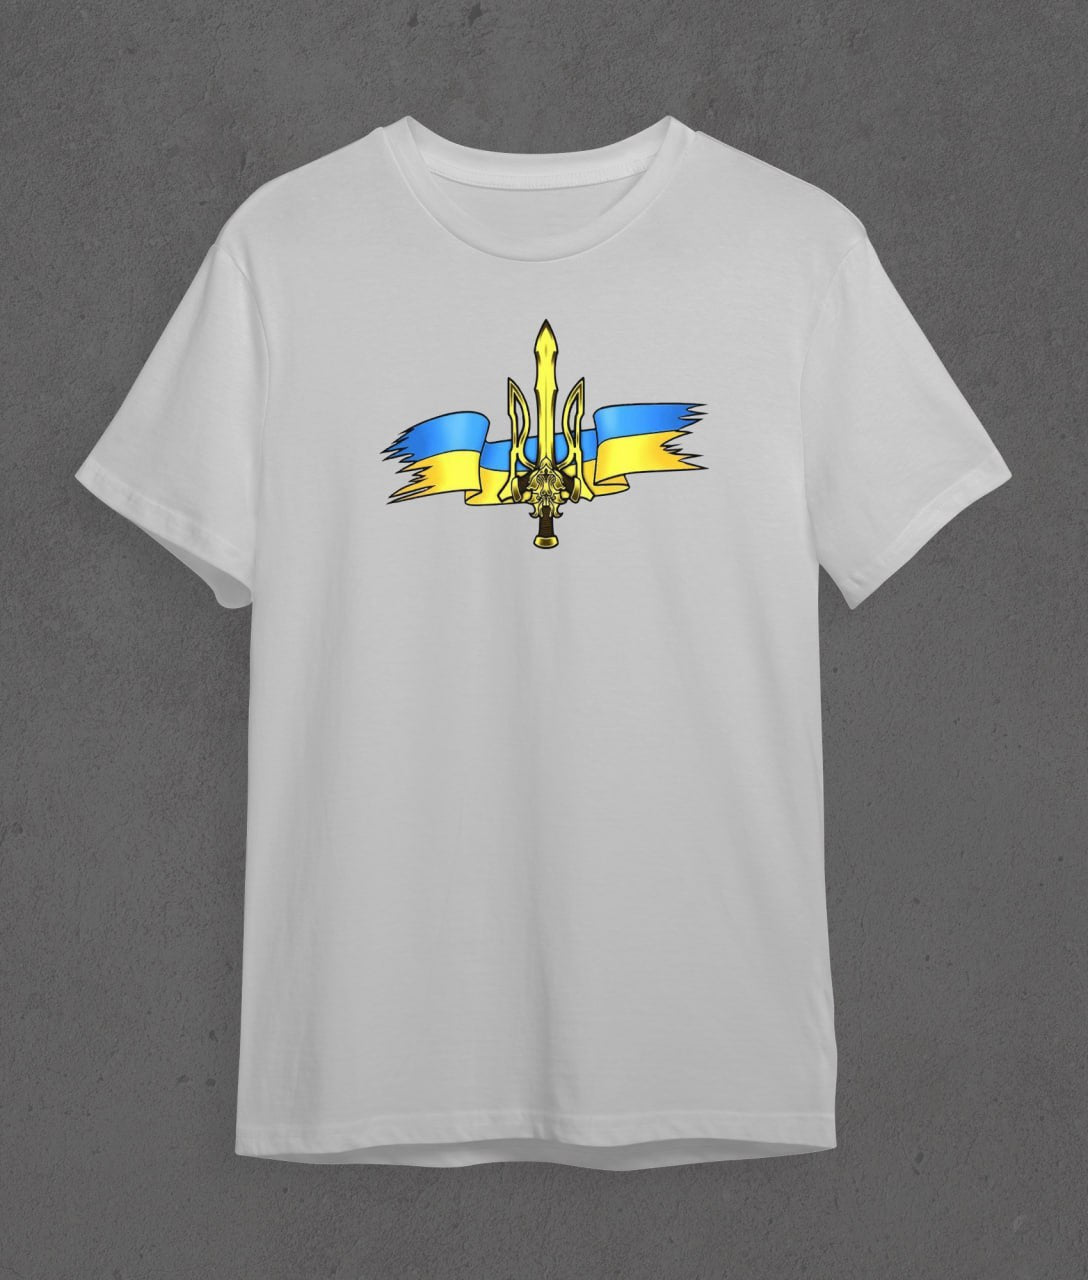 T-shirt Ukrainian Trident (sword)